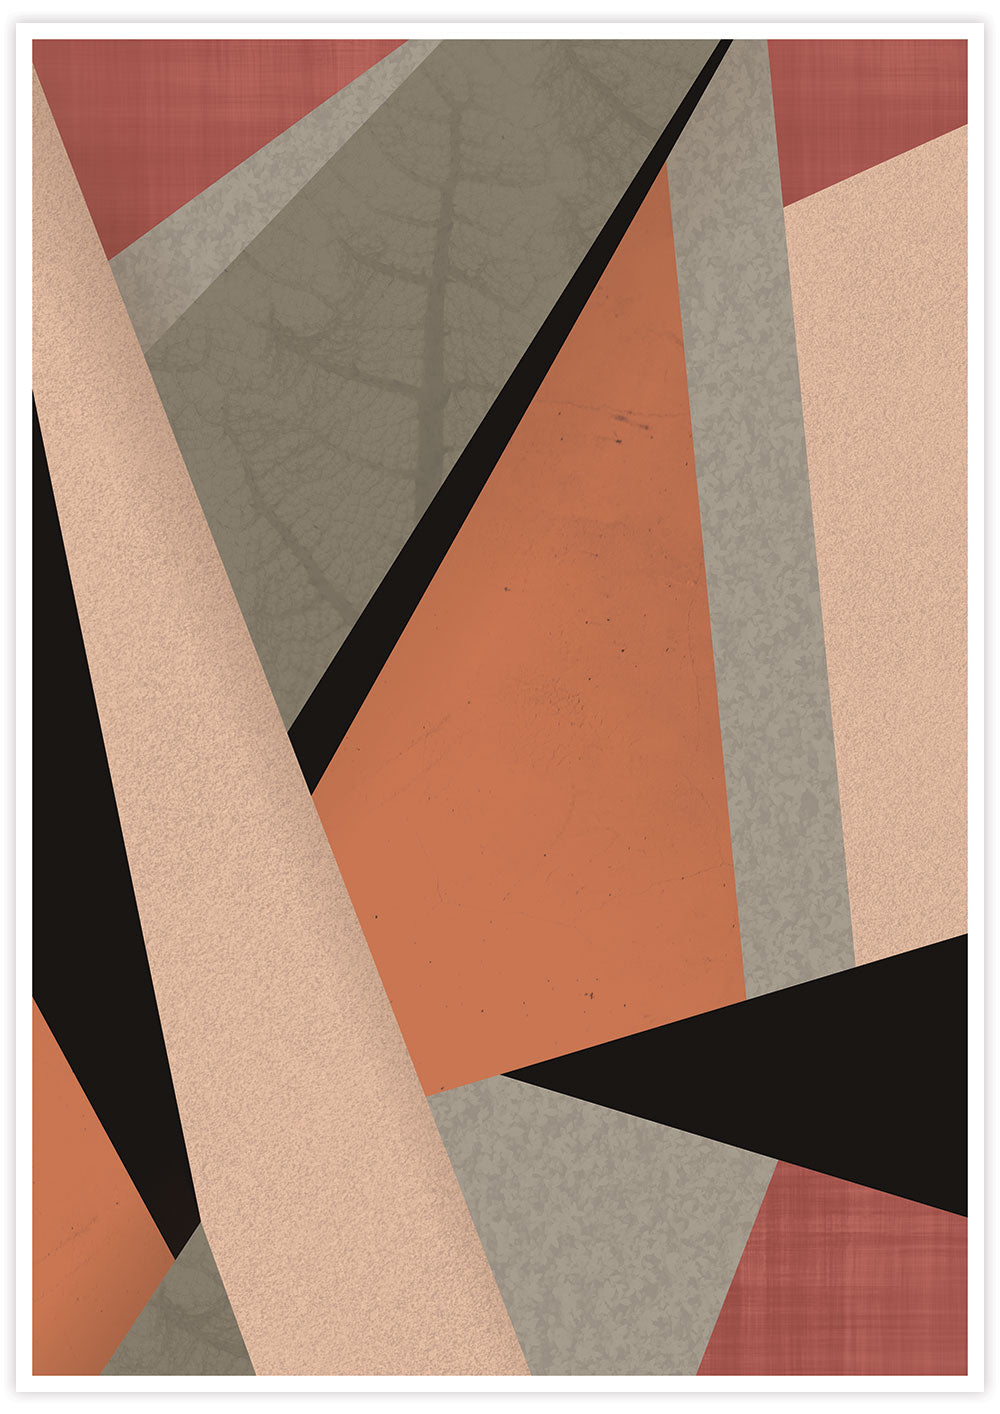 Terracota Tiles Geometric Triangle Print in no frame